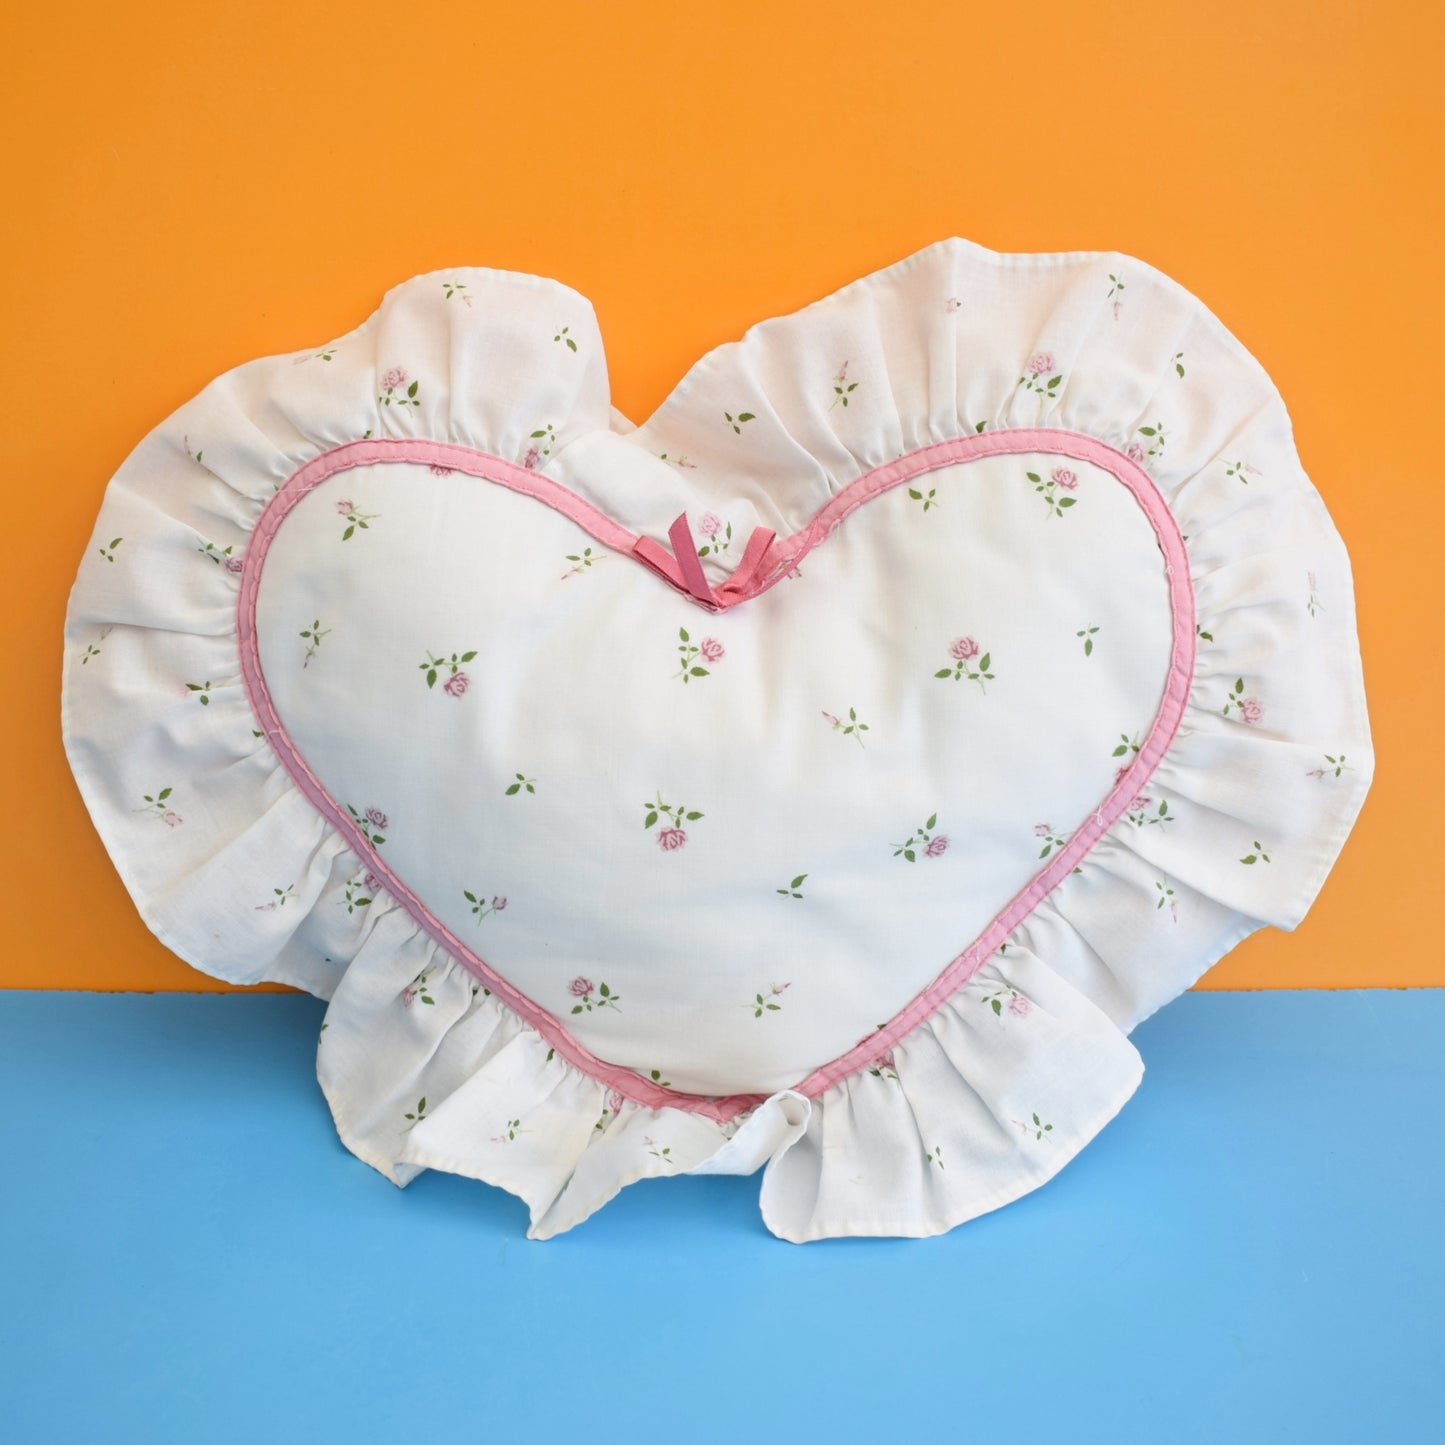 Vintage 1980s Heart Shaped Pillow - Rose Bud Design